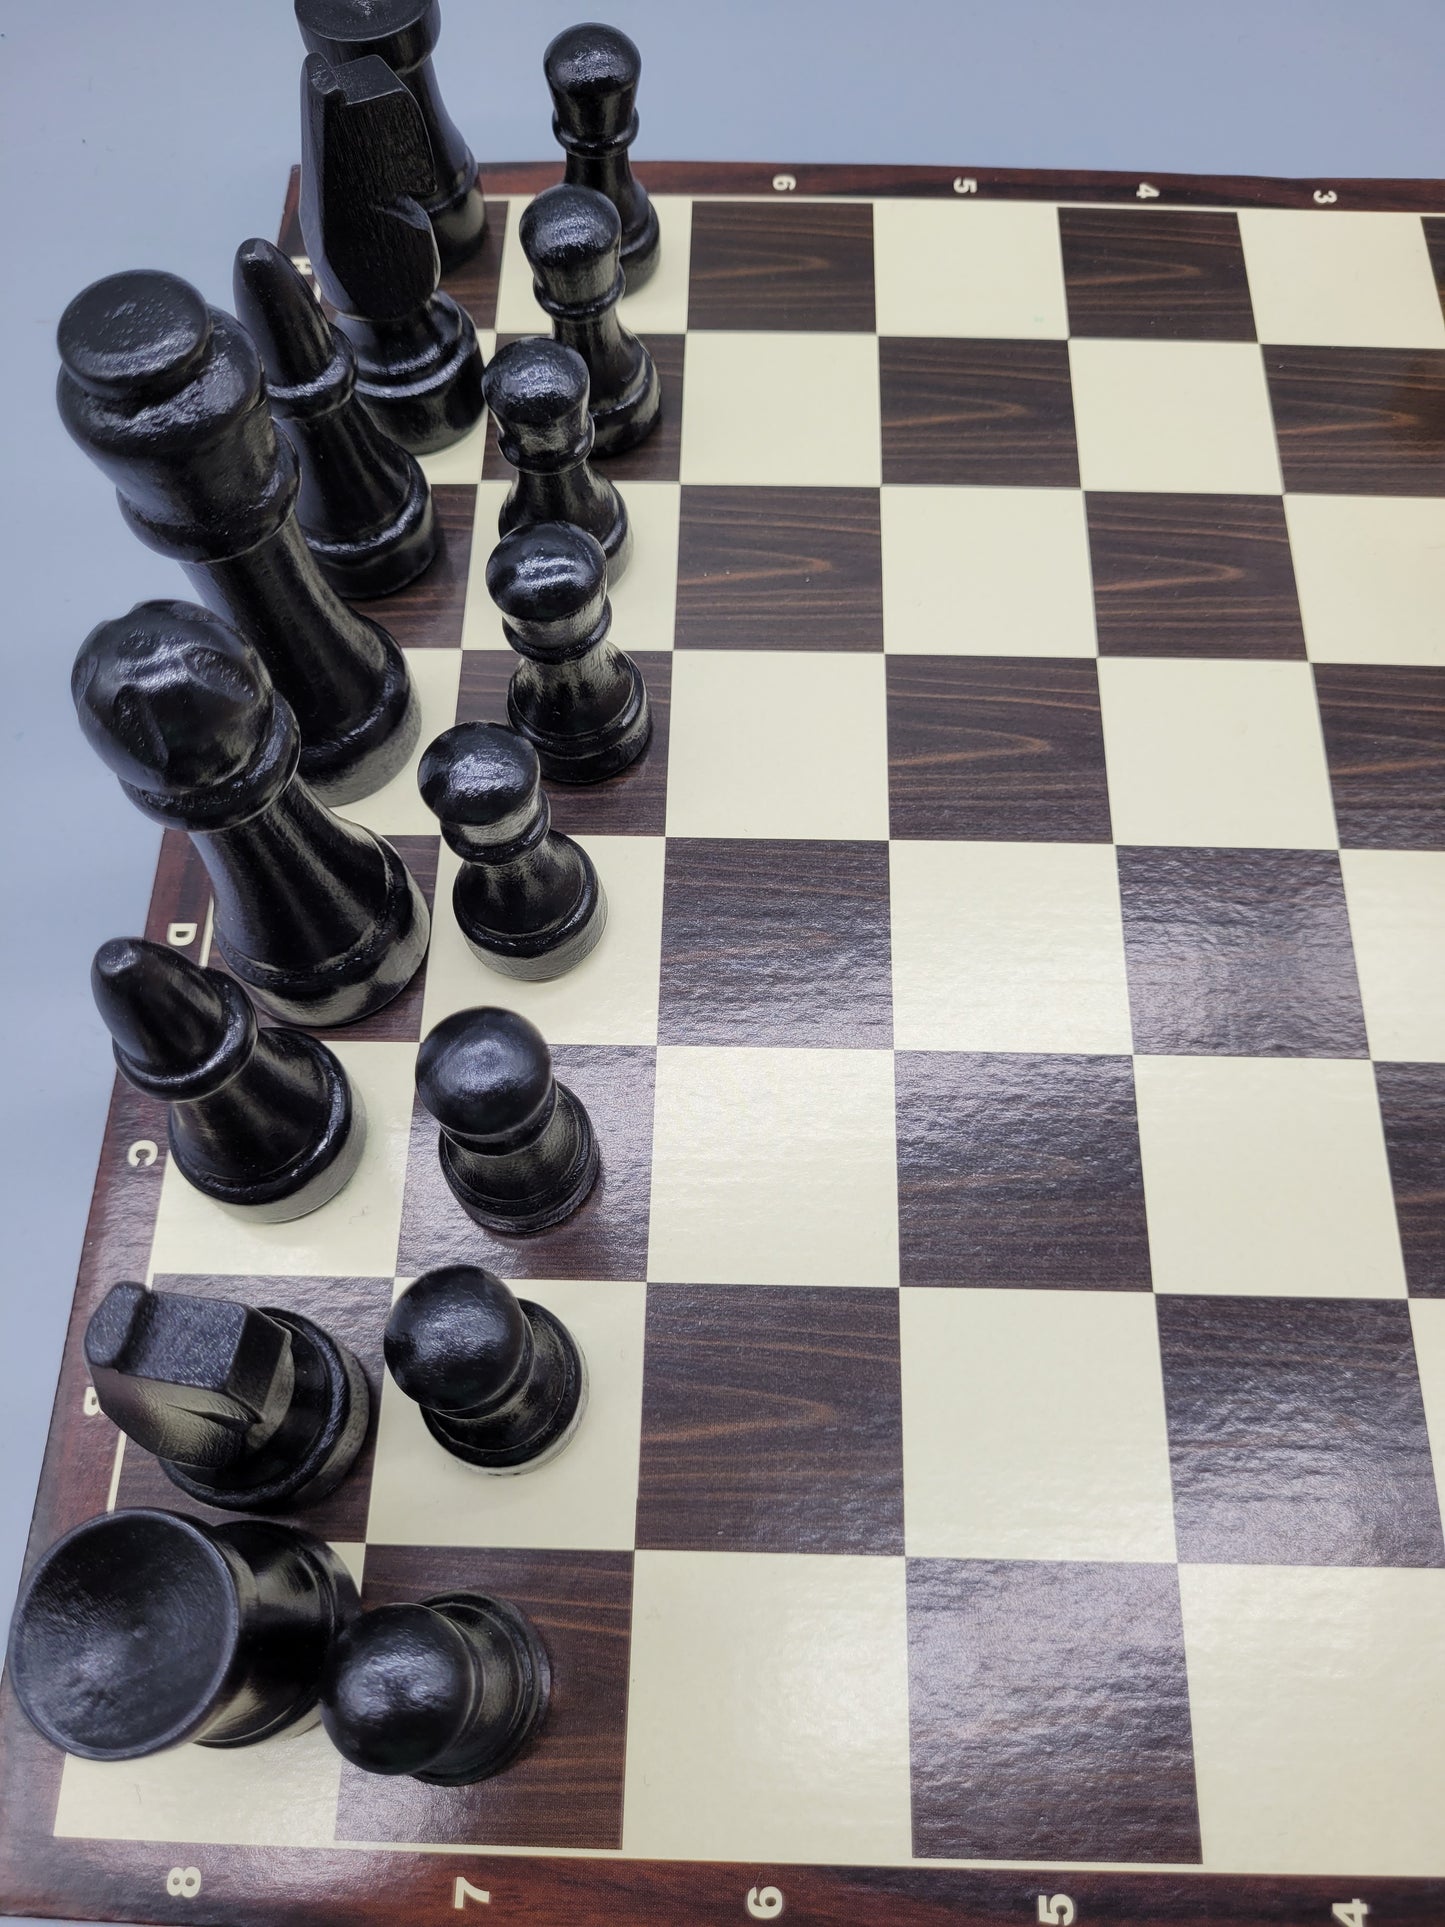 Ein Klassiker, 32 Handgeschnitzte Schachfiguren inklusive Spielbrett